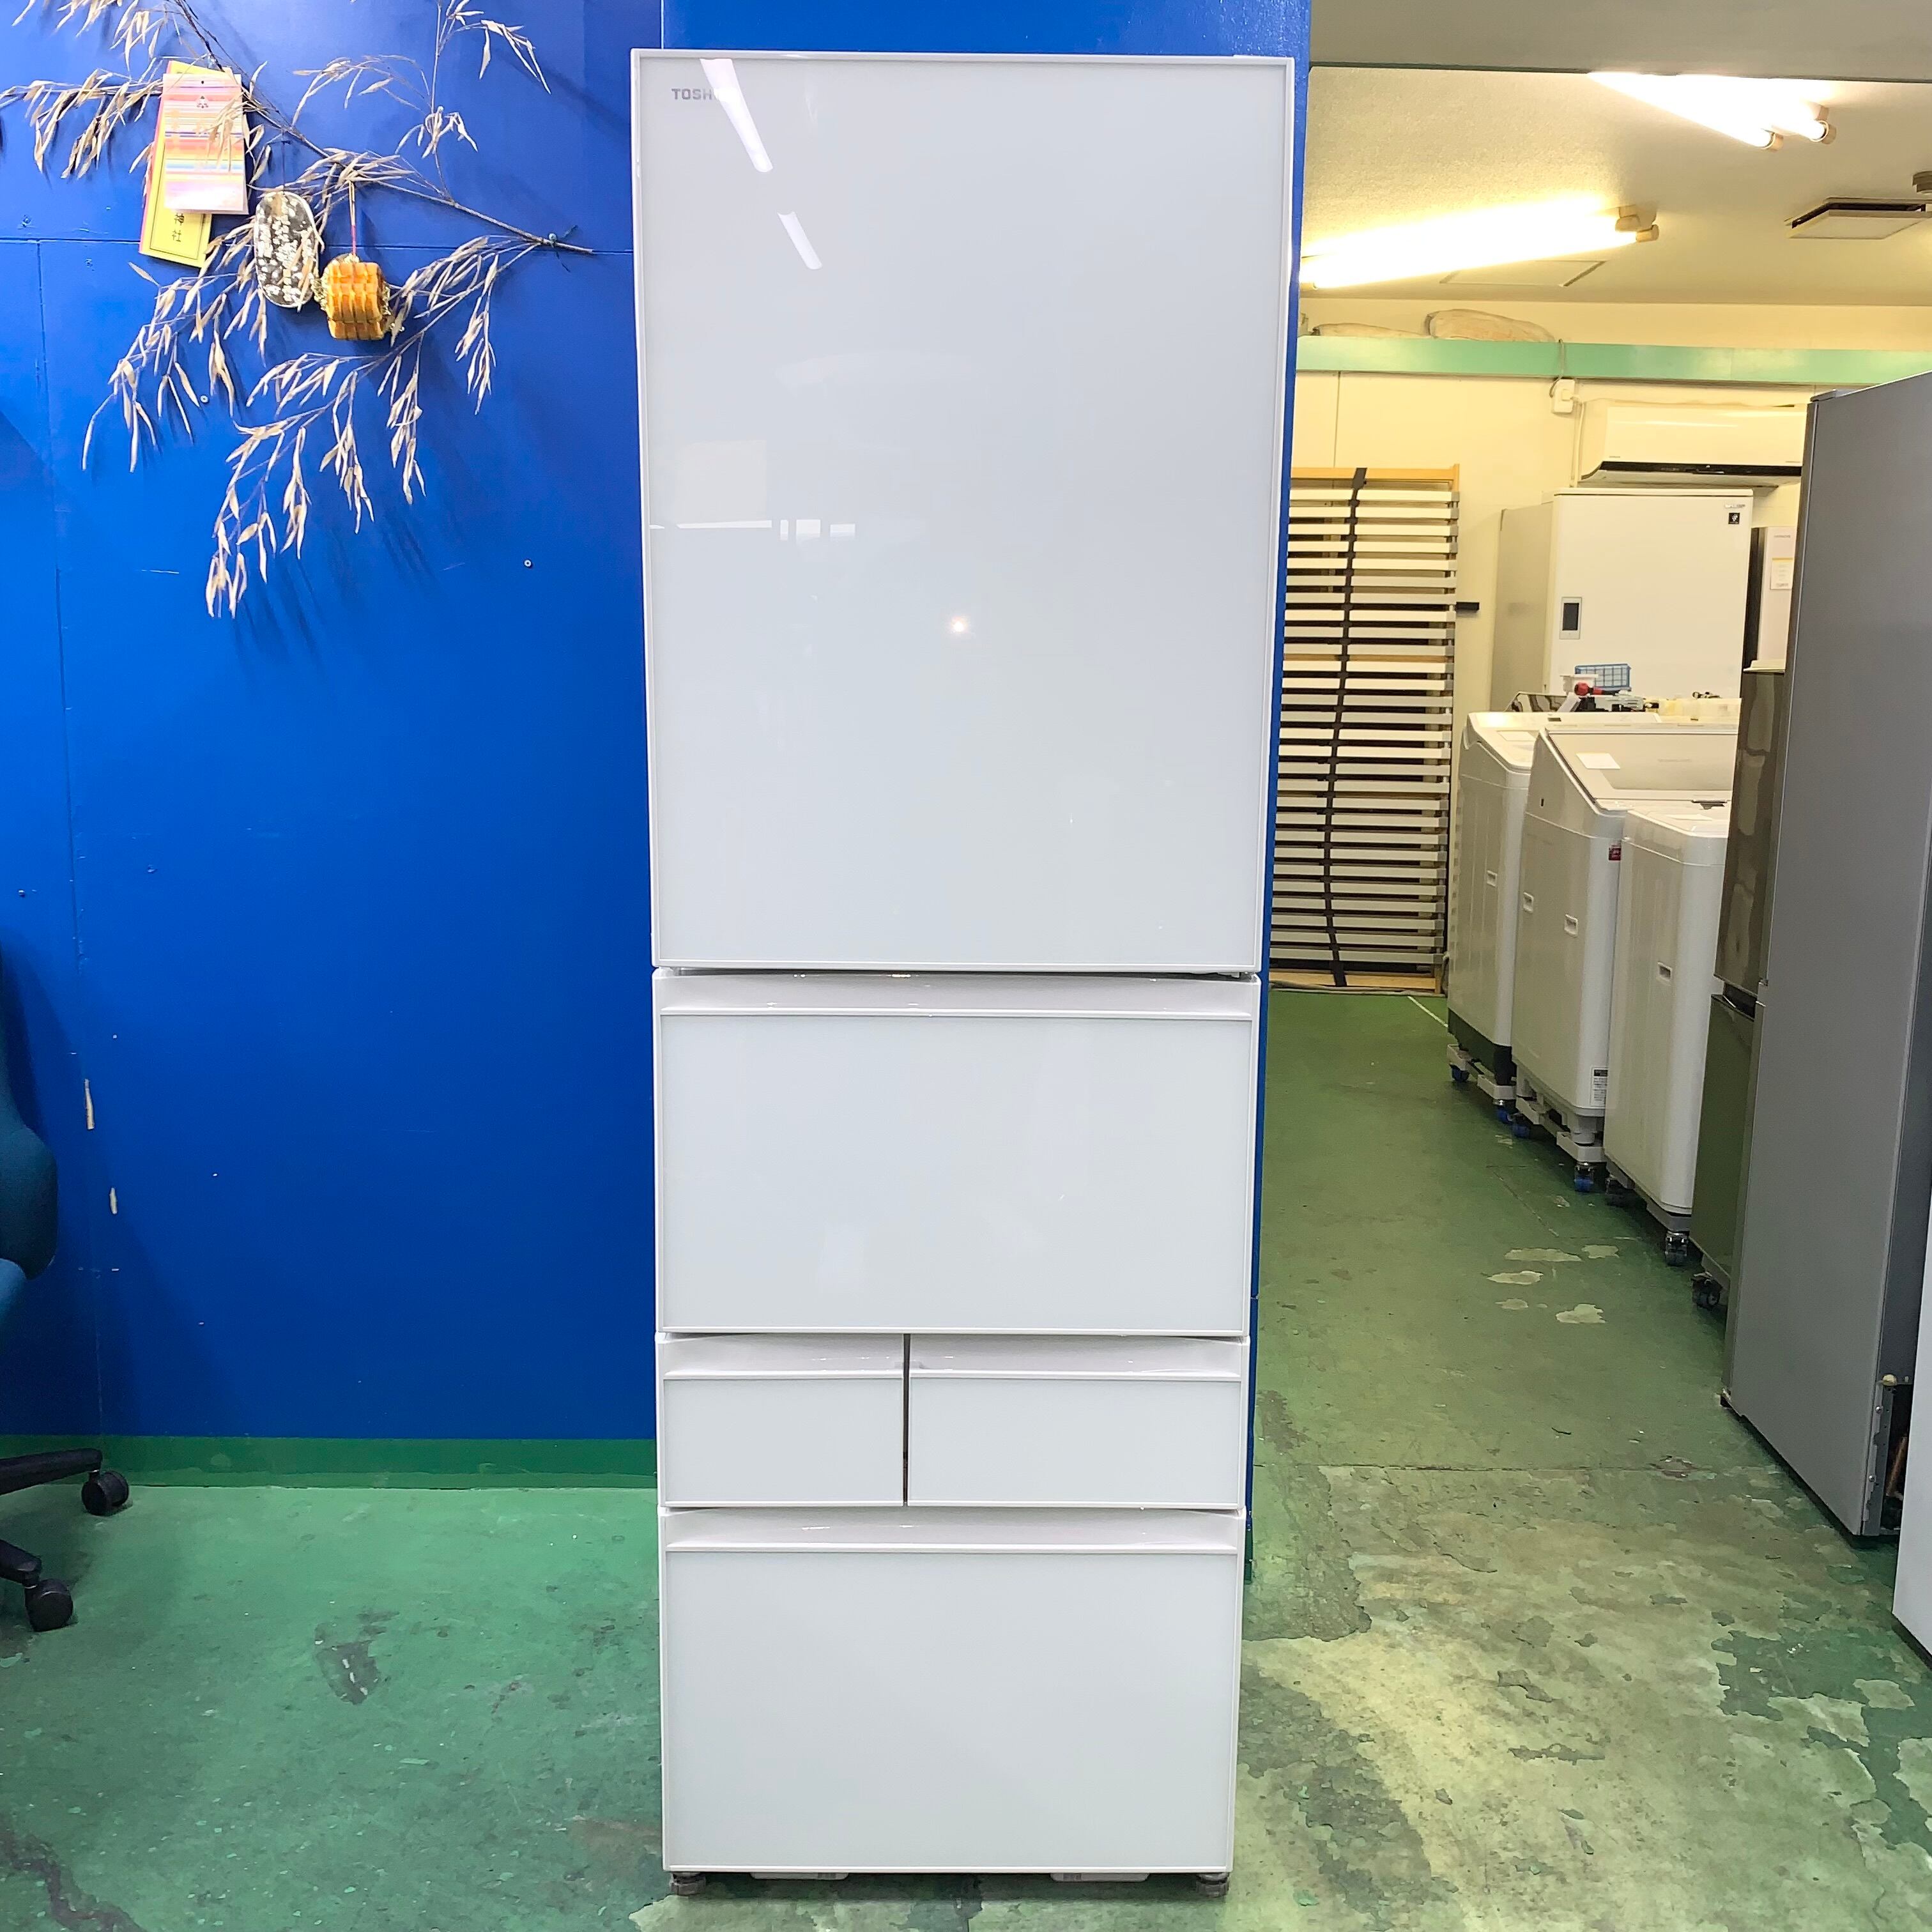 ◆HITACHI◆冷凍冷蔵庫　2018年375L自動製氷　大阪市近郊配送無料